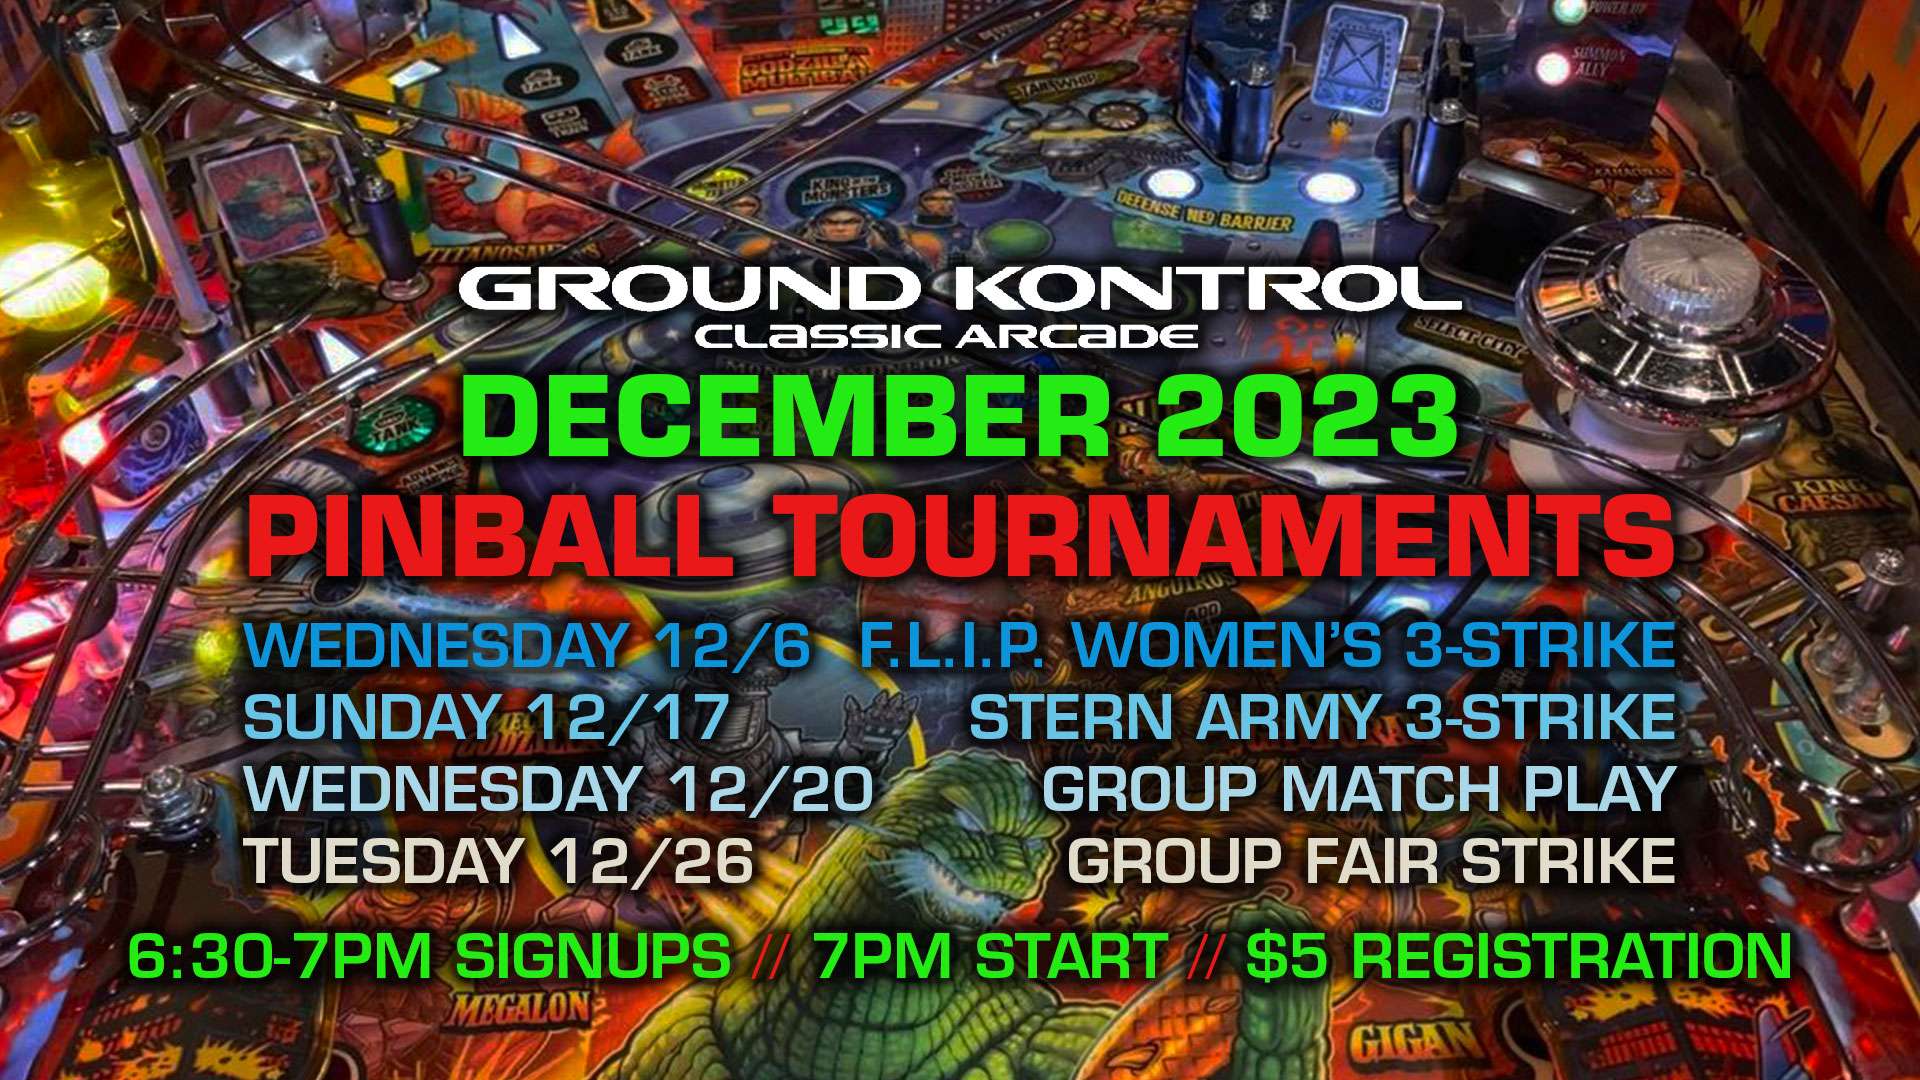 December 2023 Pinball Tournaments